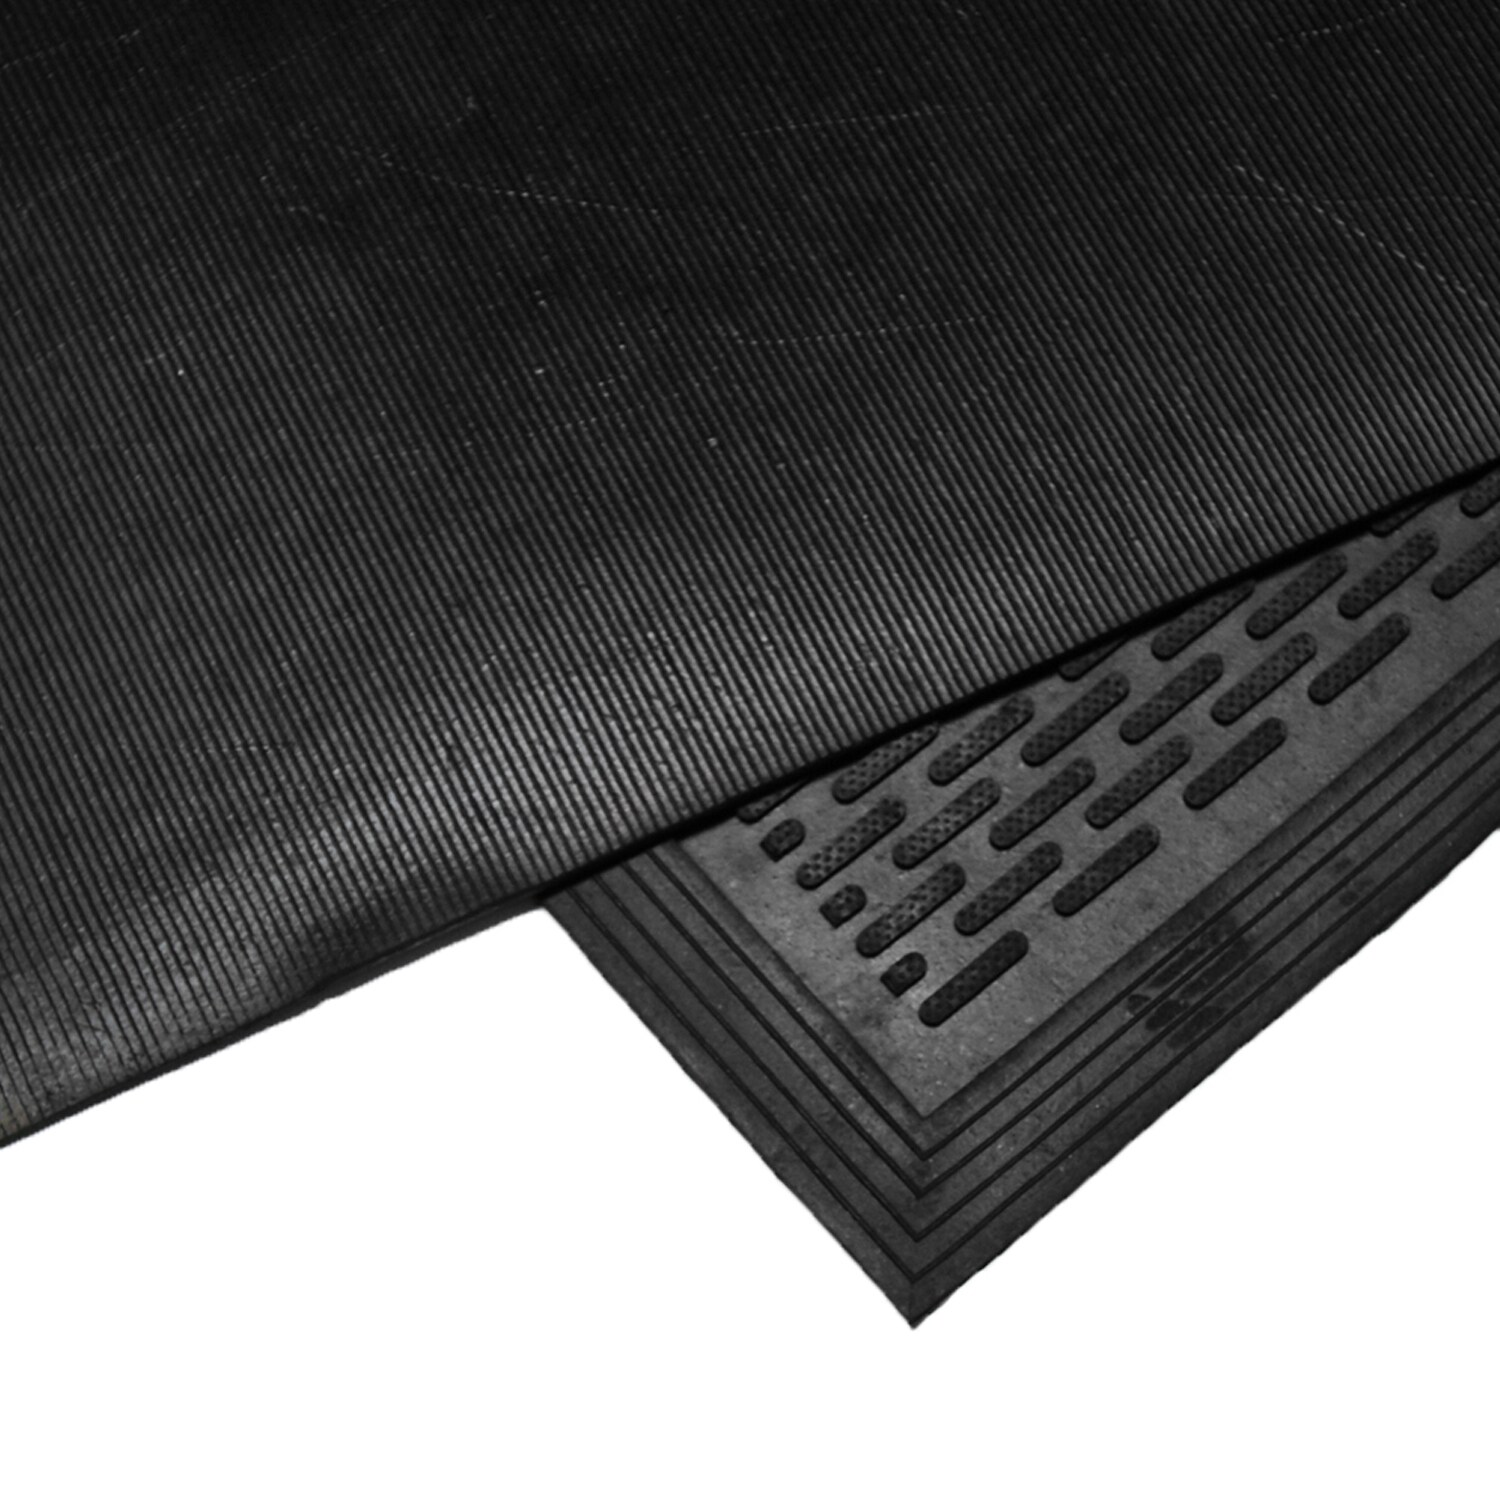 Rhino Mats 3' x 5' Black Uni-Mat All-Purpose Rubber Door Mat at Menards®